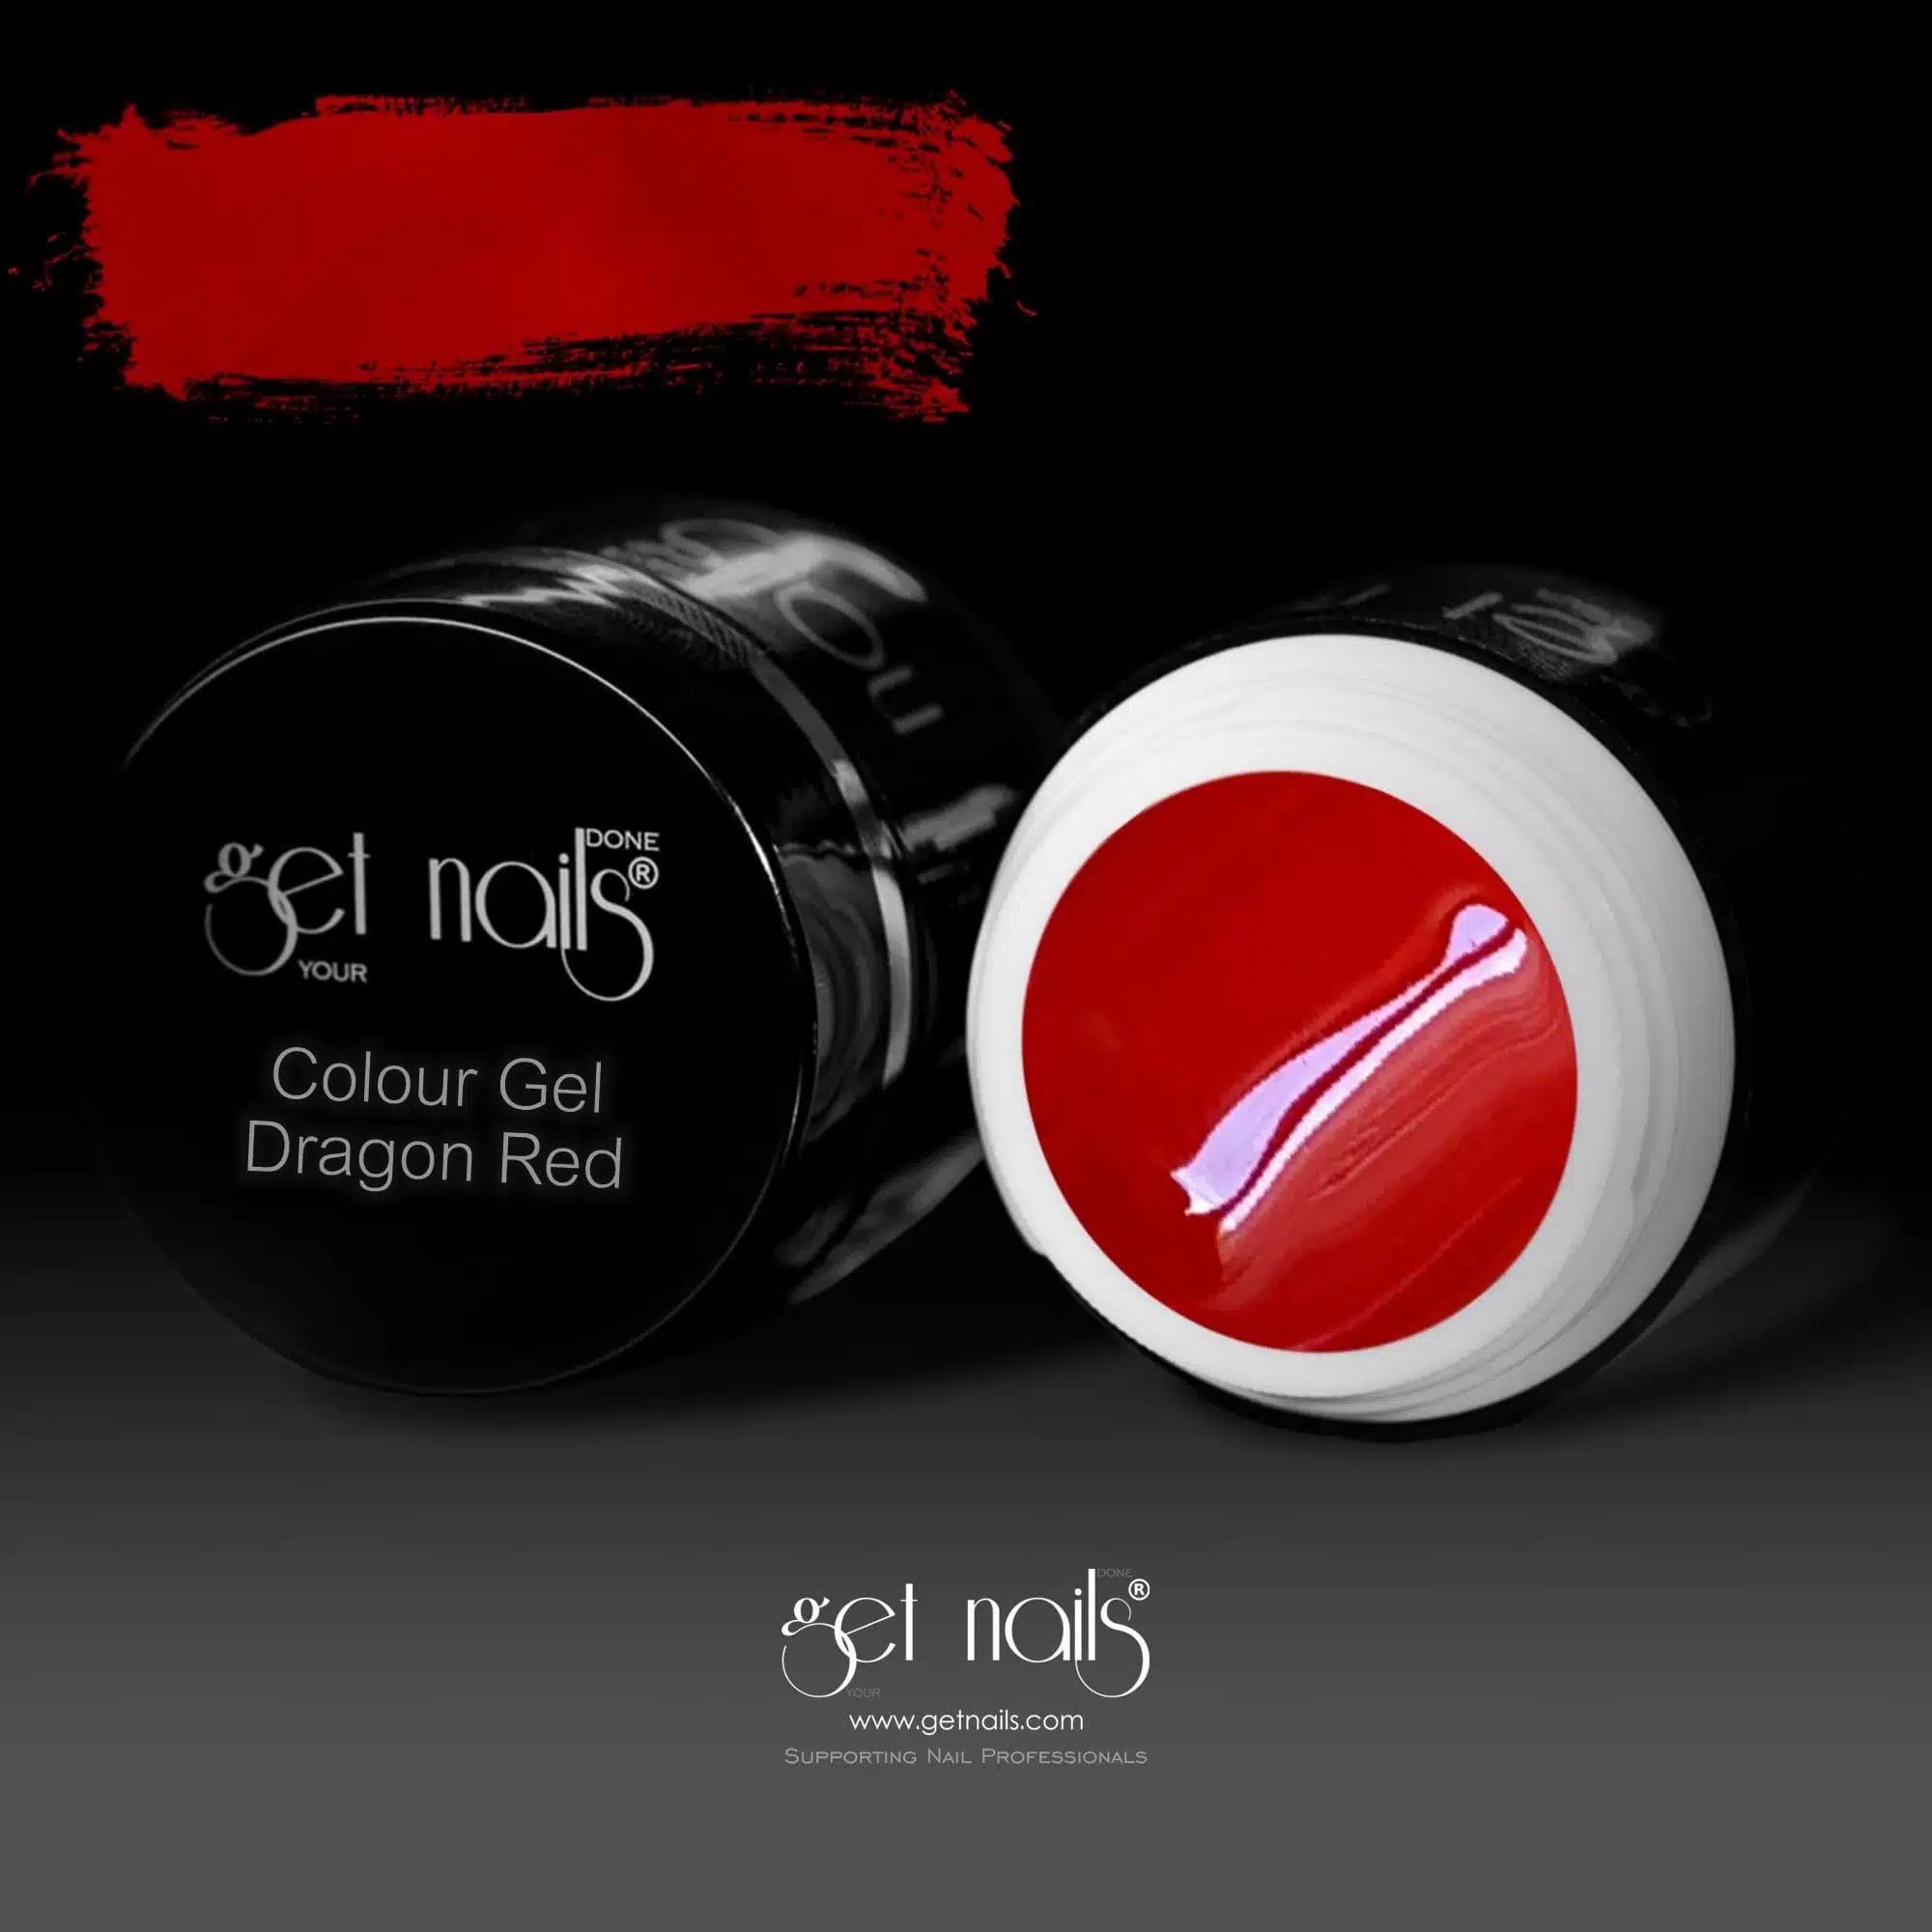 Get Nails Austria - Colour Gel Dragon Red 5g